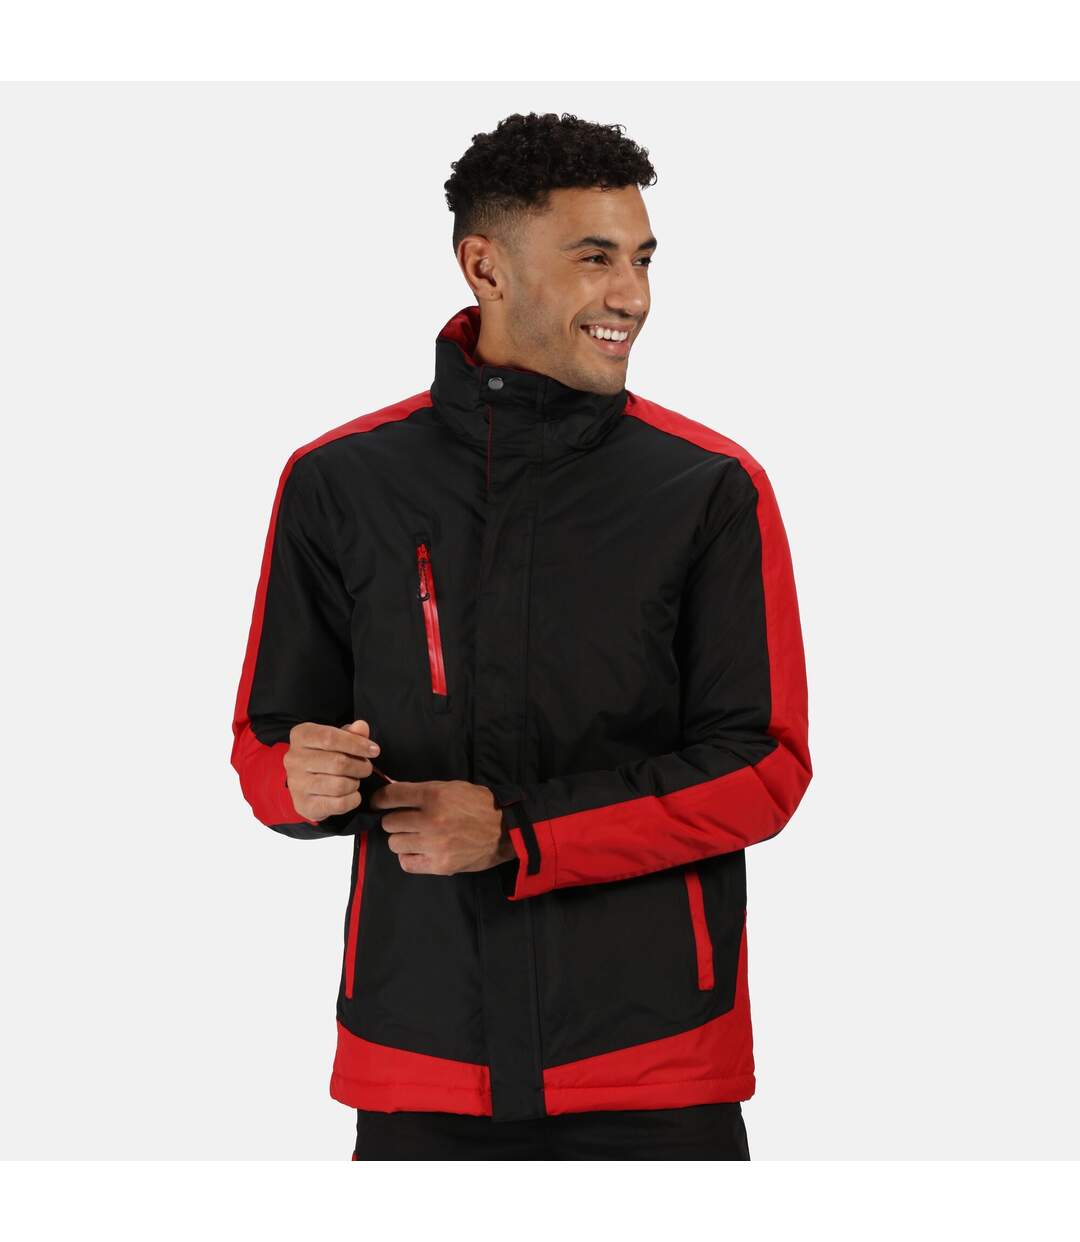 Regatta Mens Contrast Full Zip Jacket (Graphite Black/Raspberry Red)